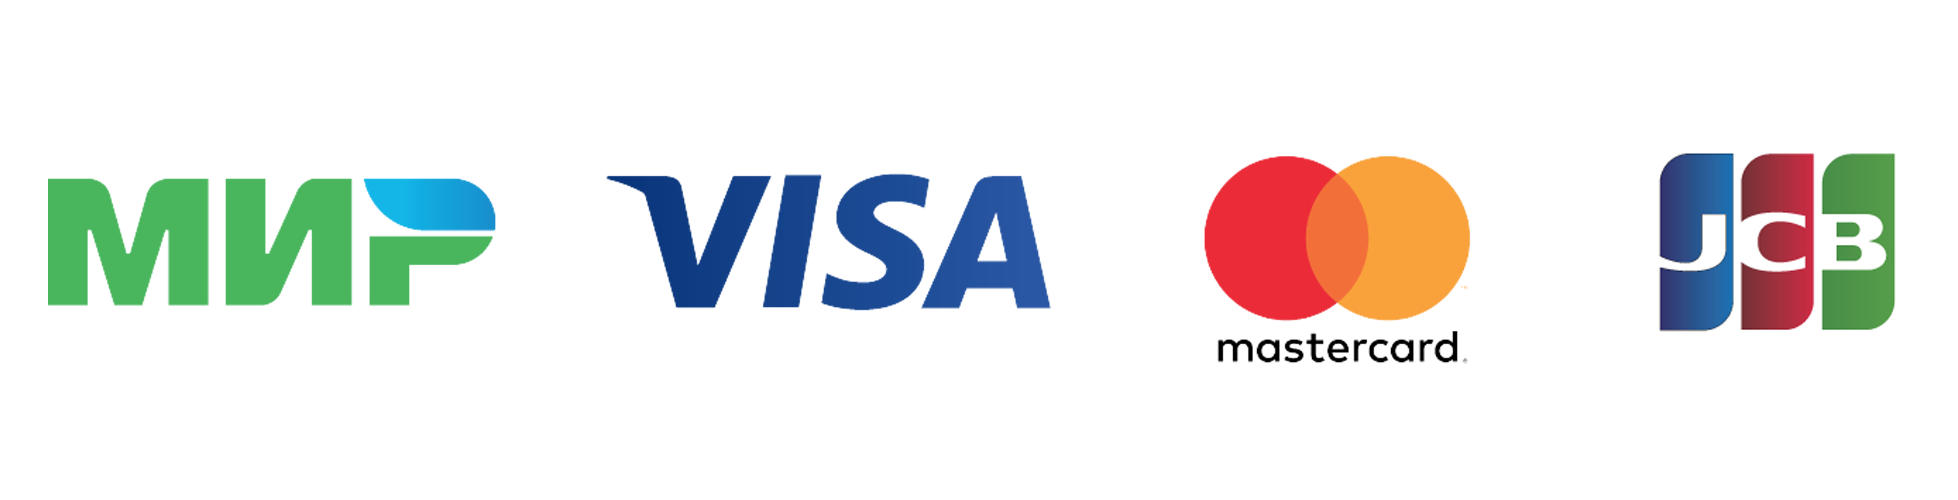 Система visa mastercard. Логотип мир виза Мастеркард JCB. Виза платежная система логотип. Логотипы платежных систем. Логотипы платёжныйх сситте.